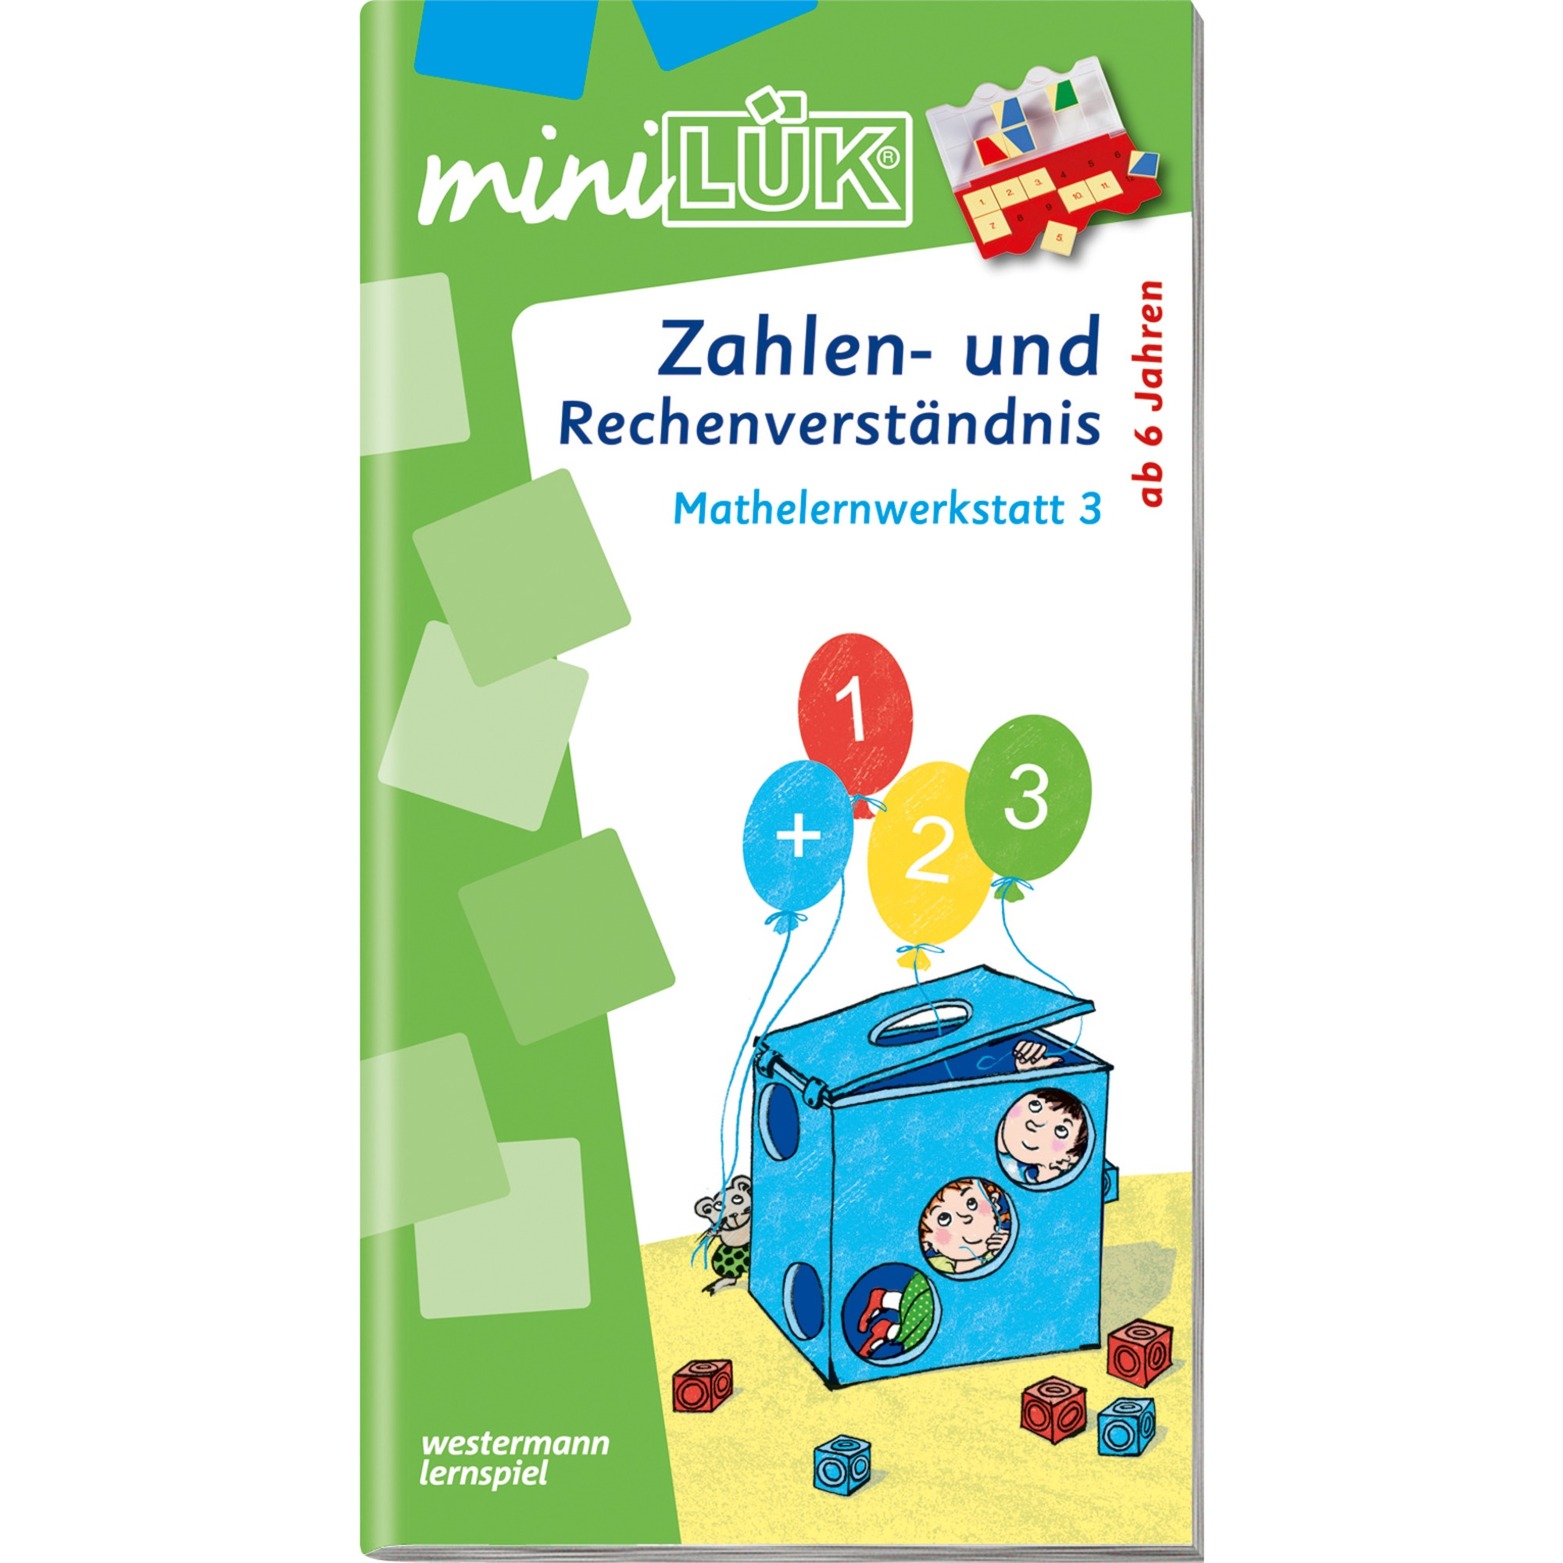 miniLÜK Zahlen- und Rechenverständnis Mathelernwerkstatt 3 książka dla dzieci, Książki edukacyjne